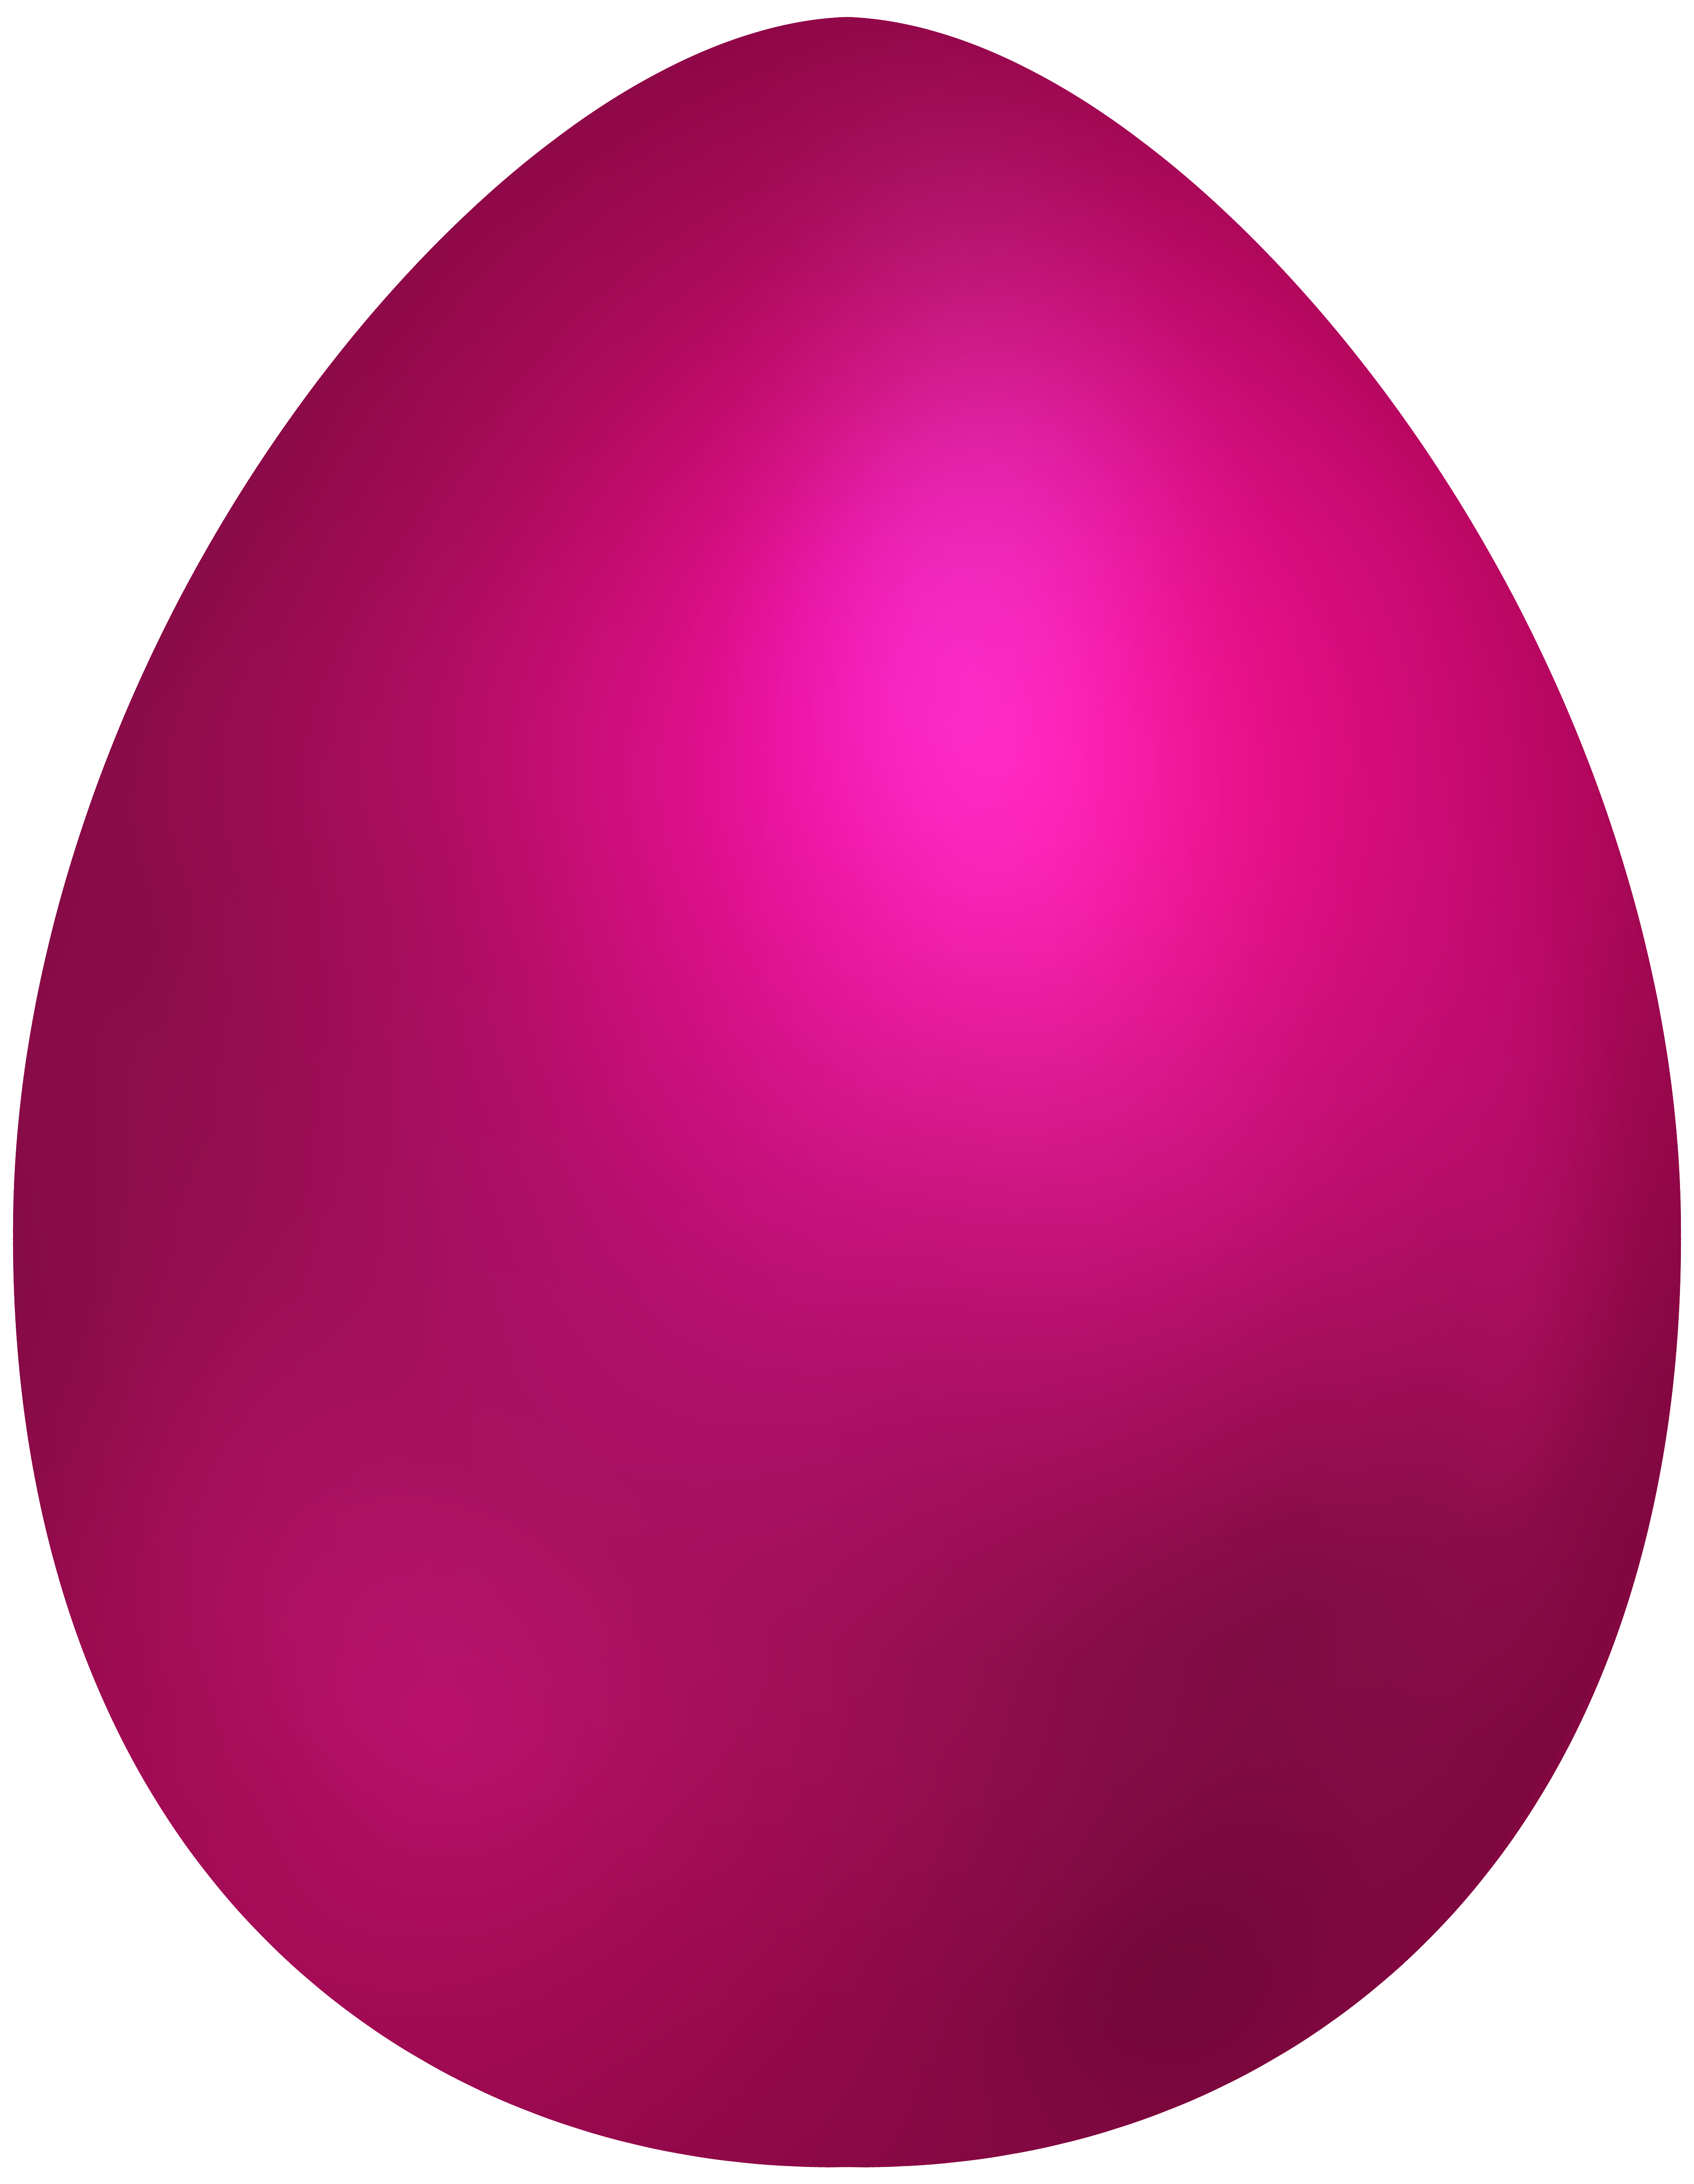 Pasqua easter egg png. Clipart homework pink